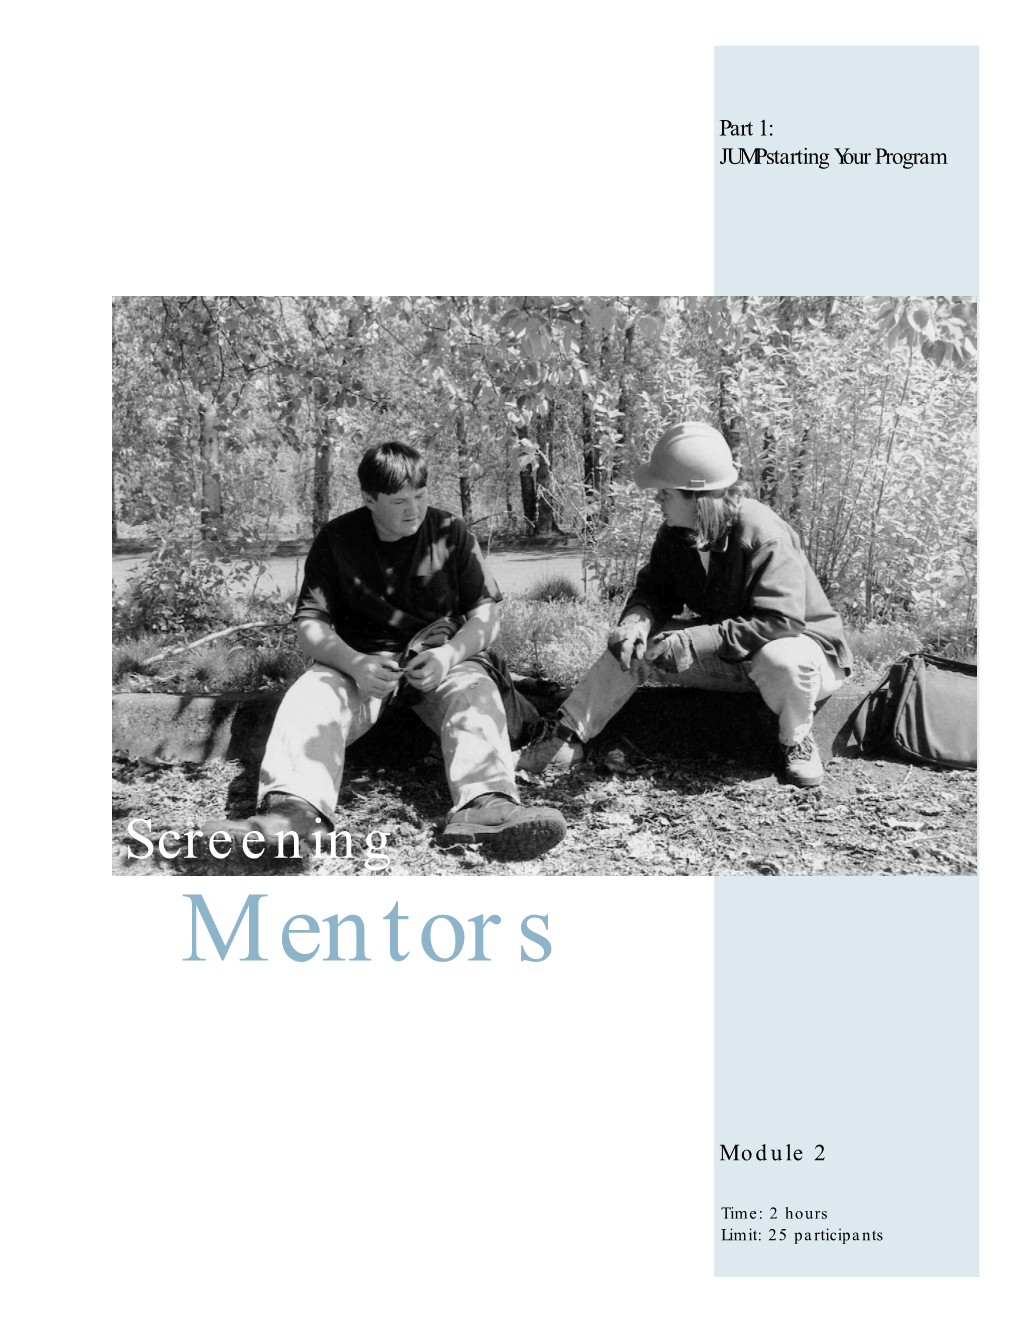 Module 2: Screening Mentors